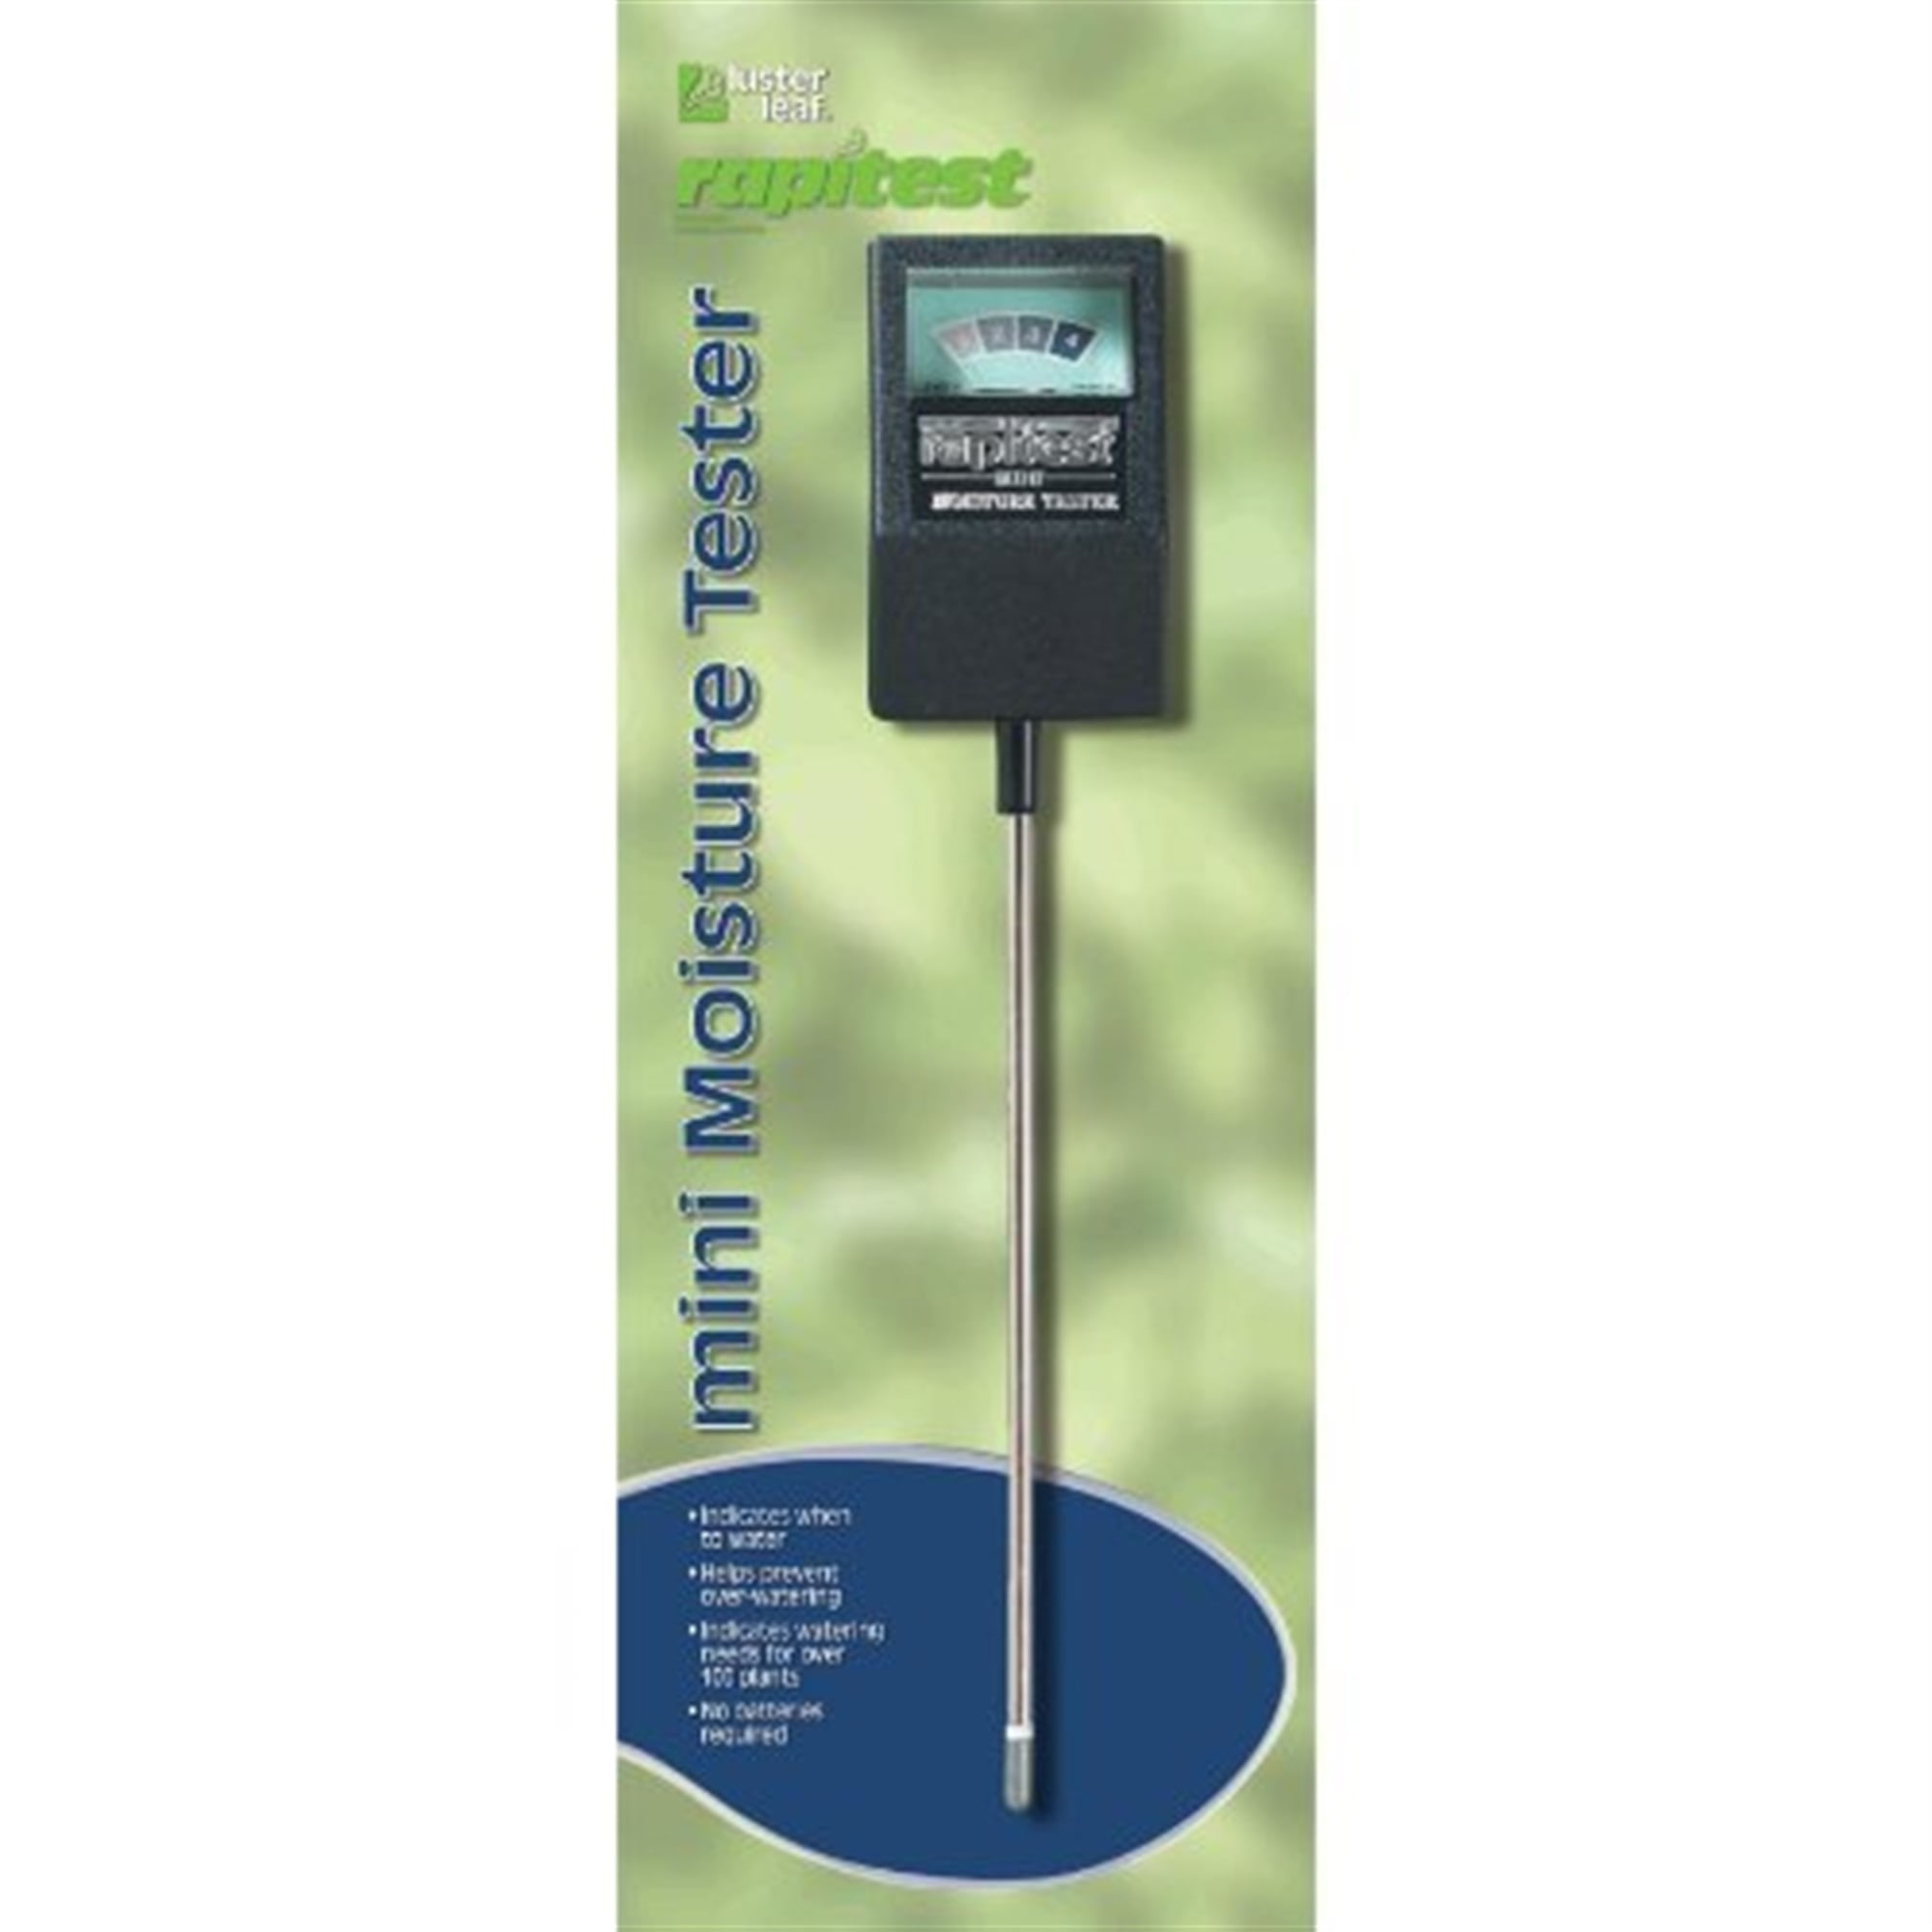 LUSTER LEAF 1820 RAPIDTEST Soil Plant Garden Moisture Sensor Meter Tester for sale online 